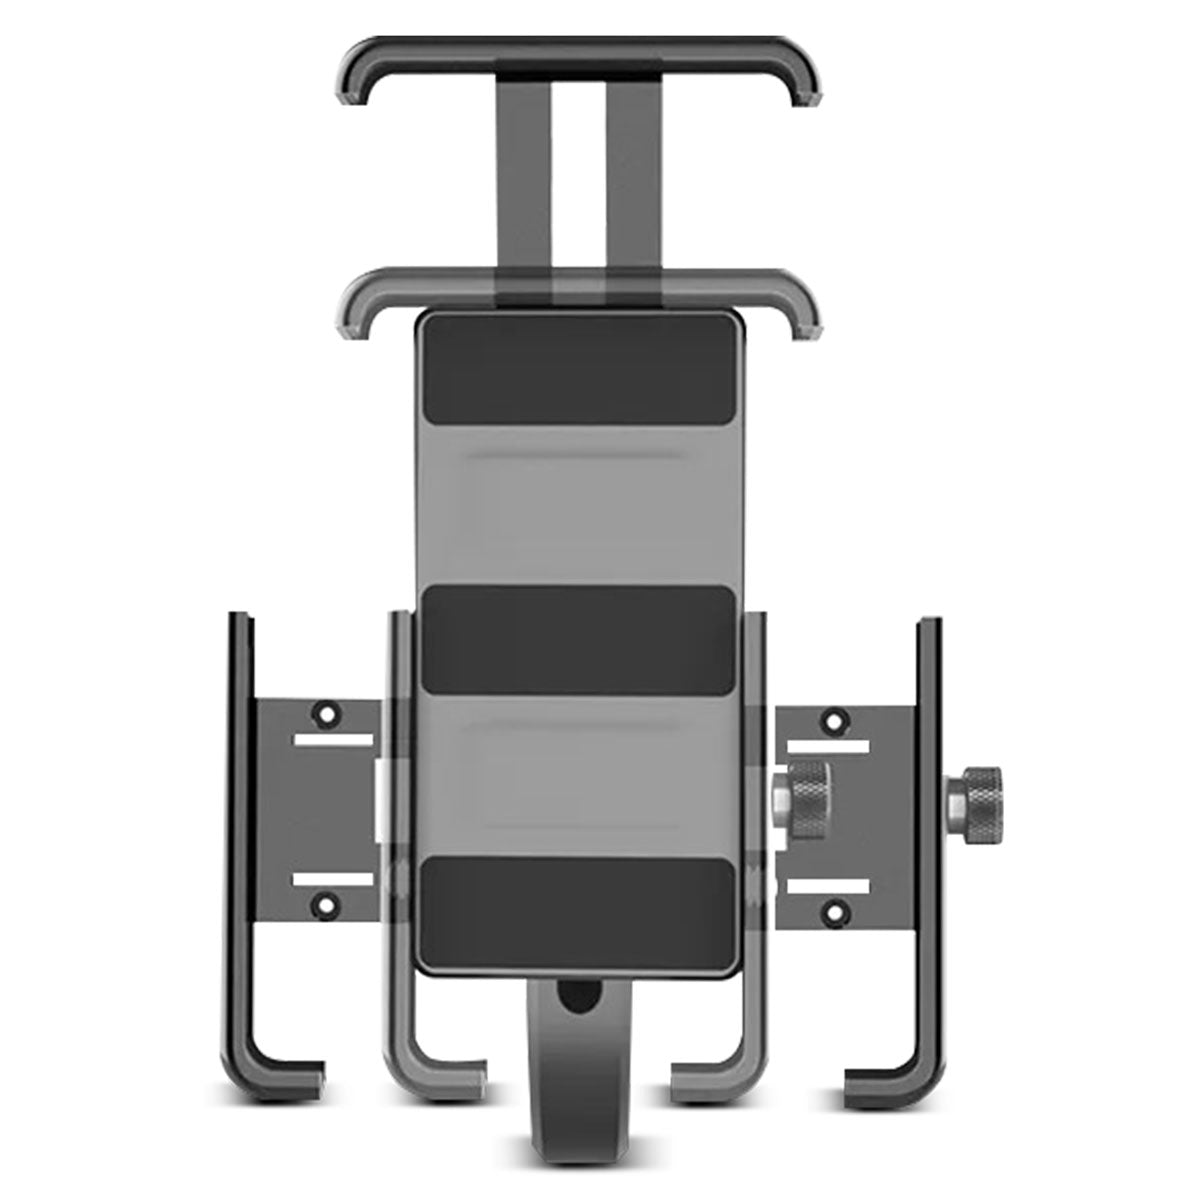 Progear Aluminium Tray Bicycle / Motorcycle Phone Holder